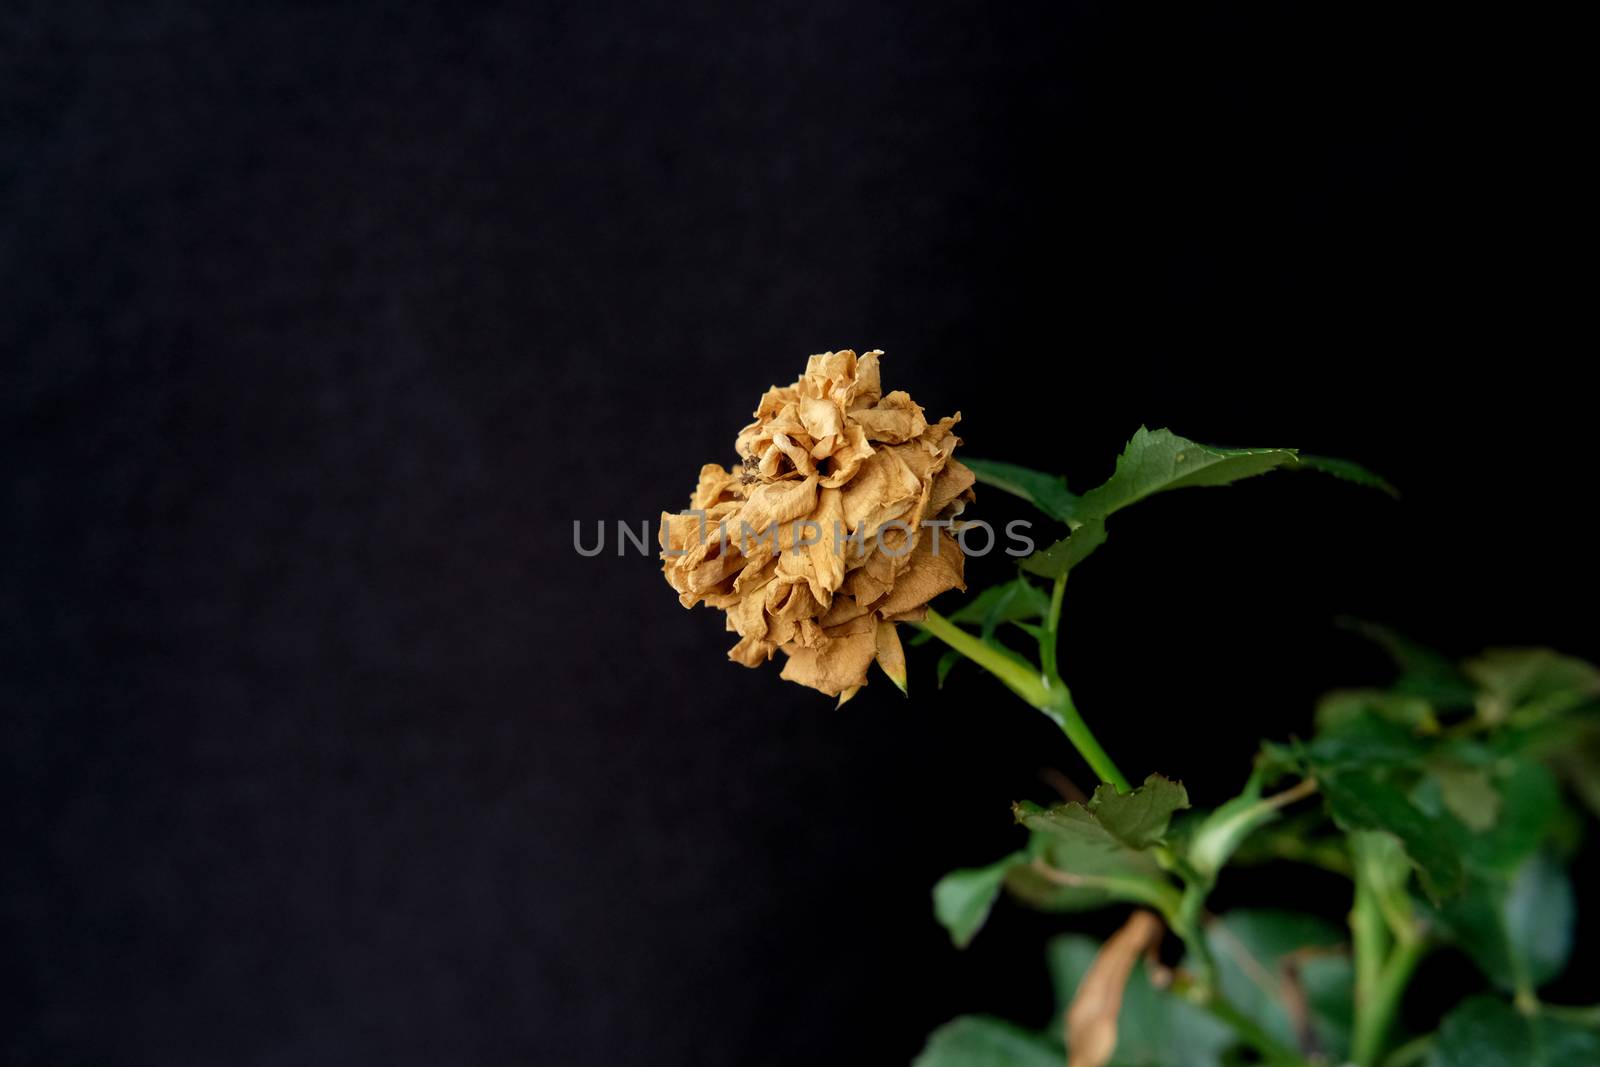 dried petal, brown rose flower on black background. Image photo